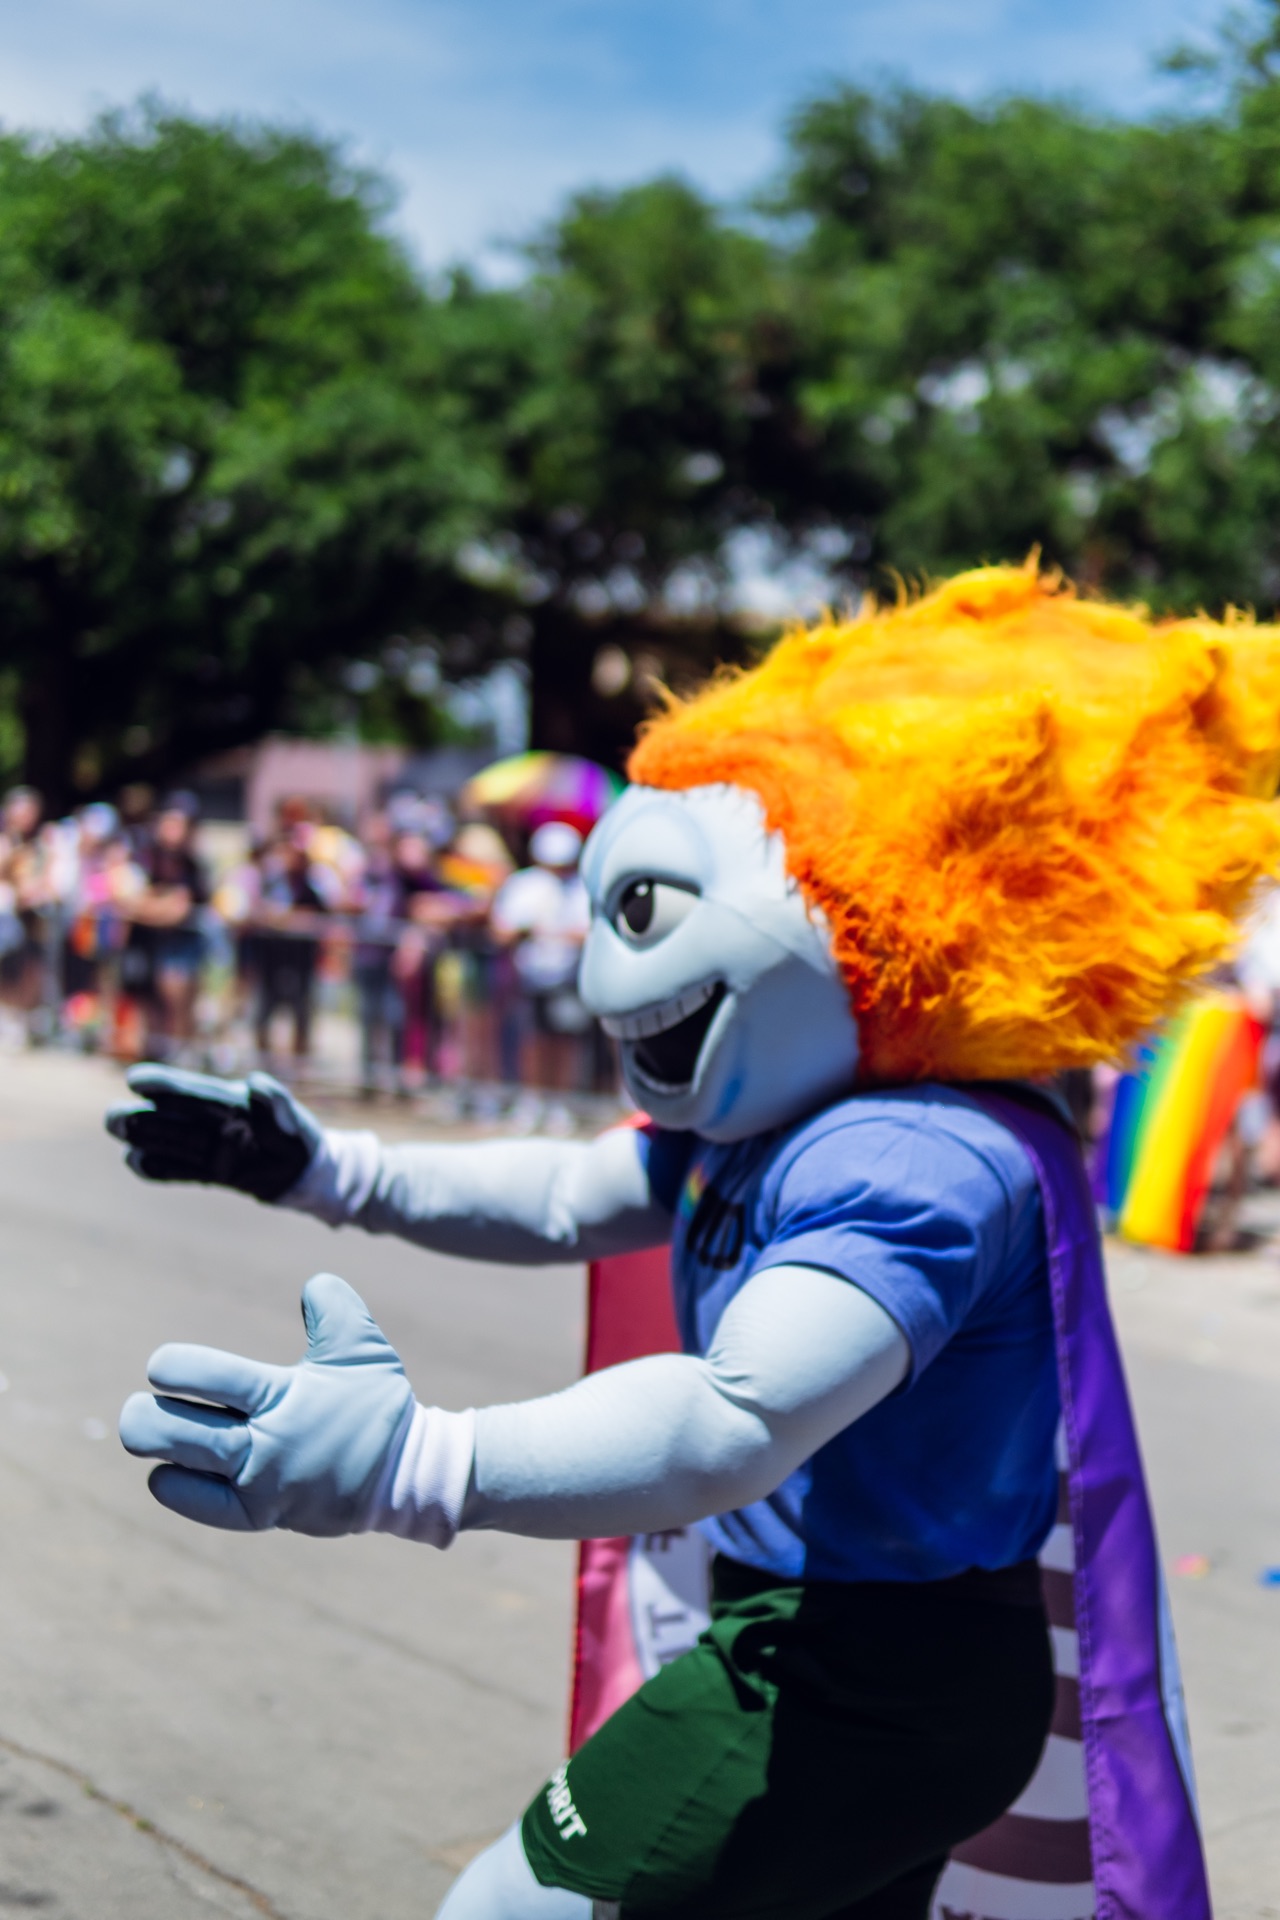 TEMOC Greets the Crowd at the Dallas Pride Parade